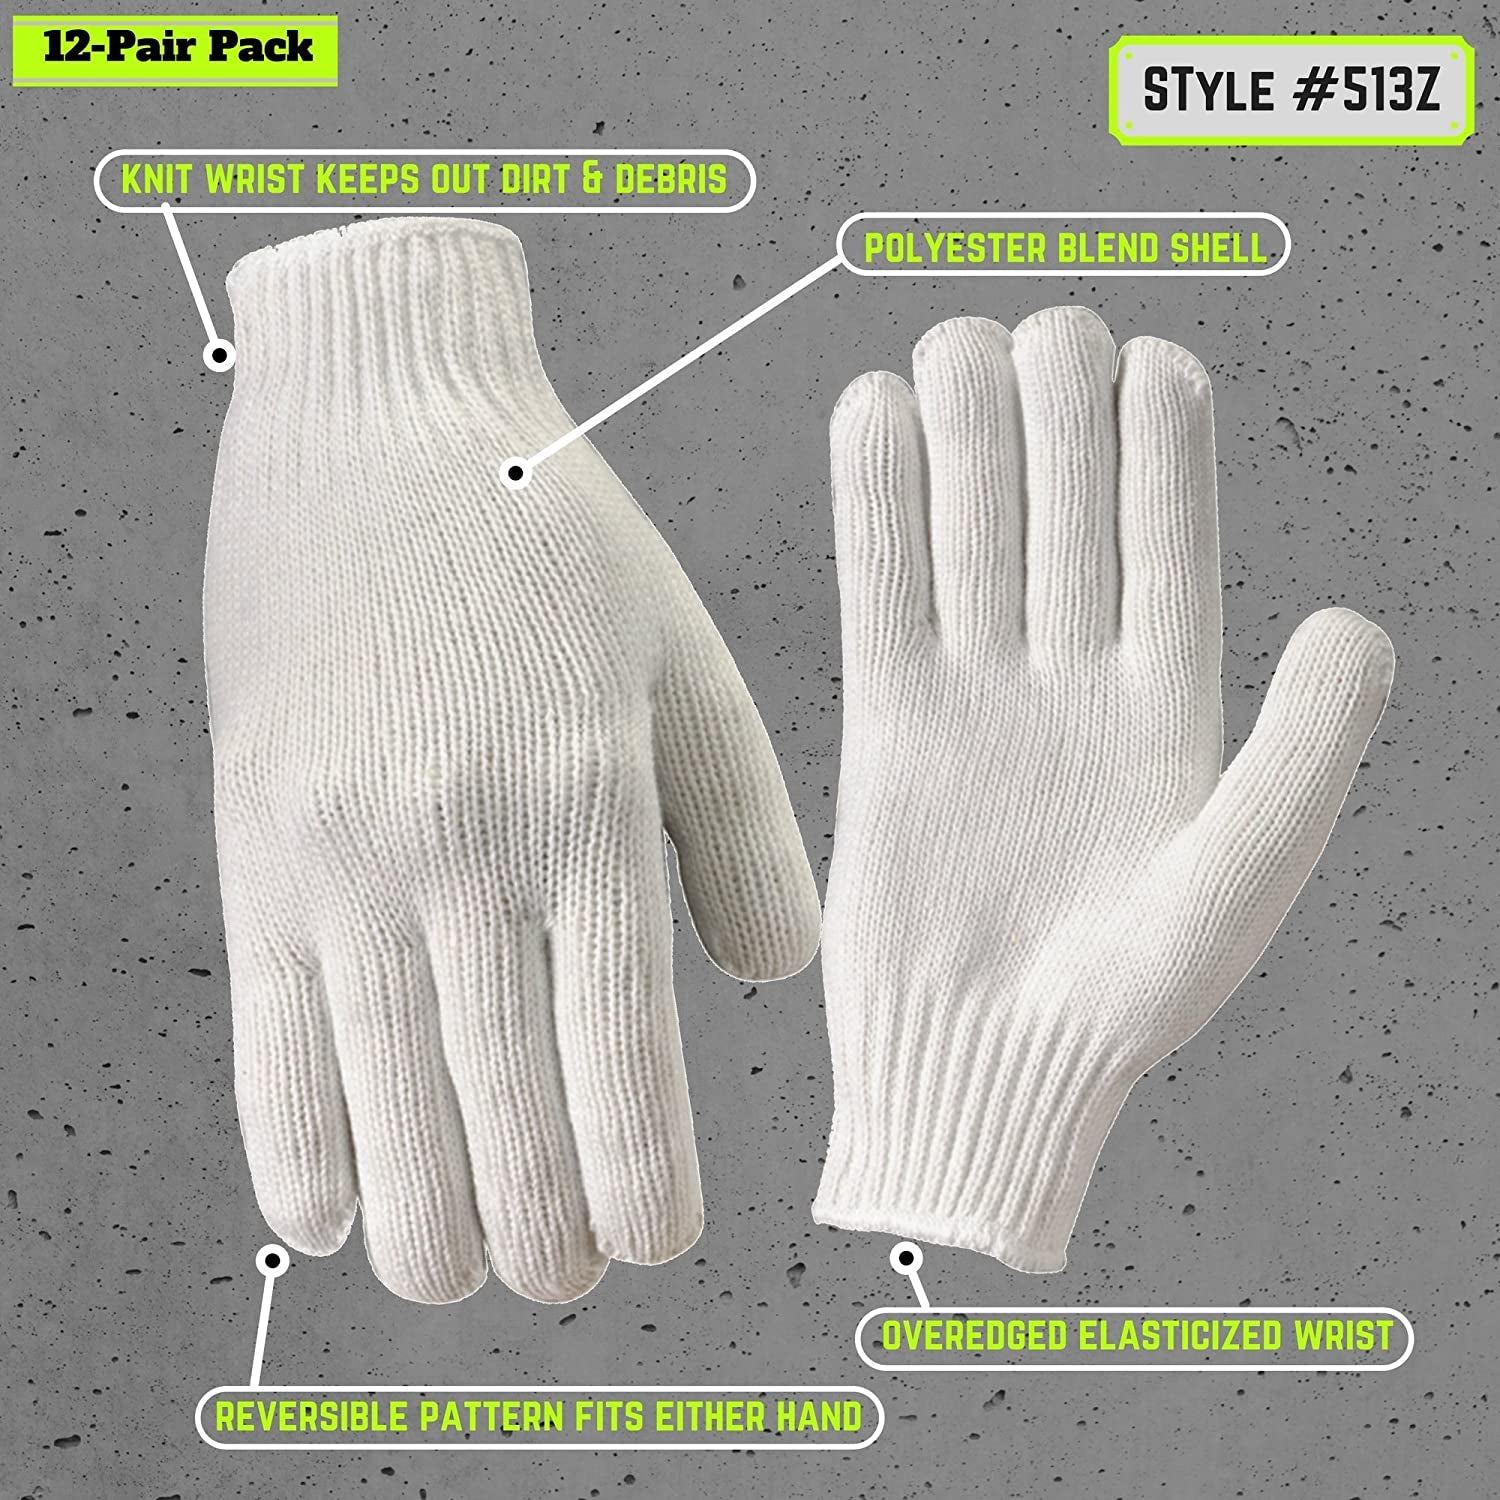 Wells Lamont 12 Pair Pack Work Gloves